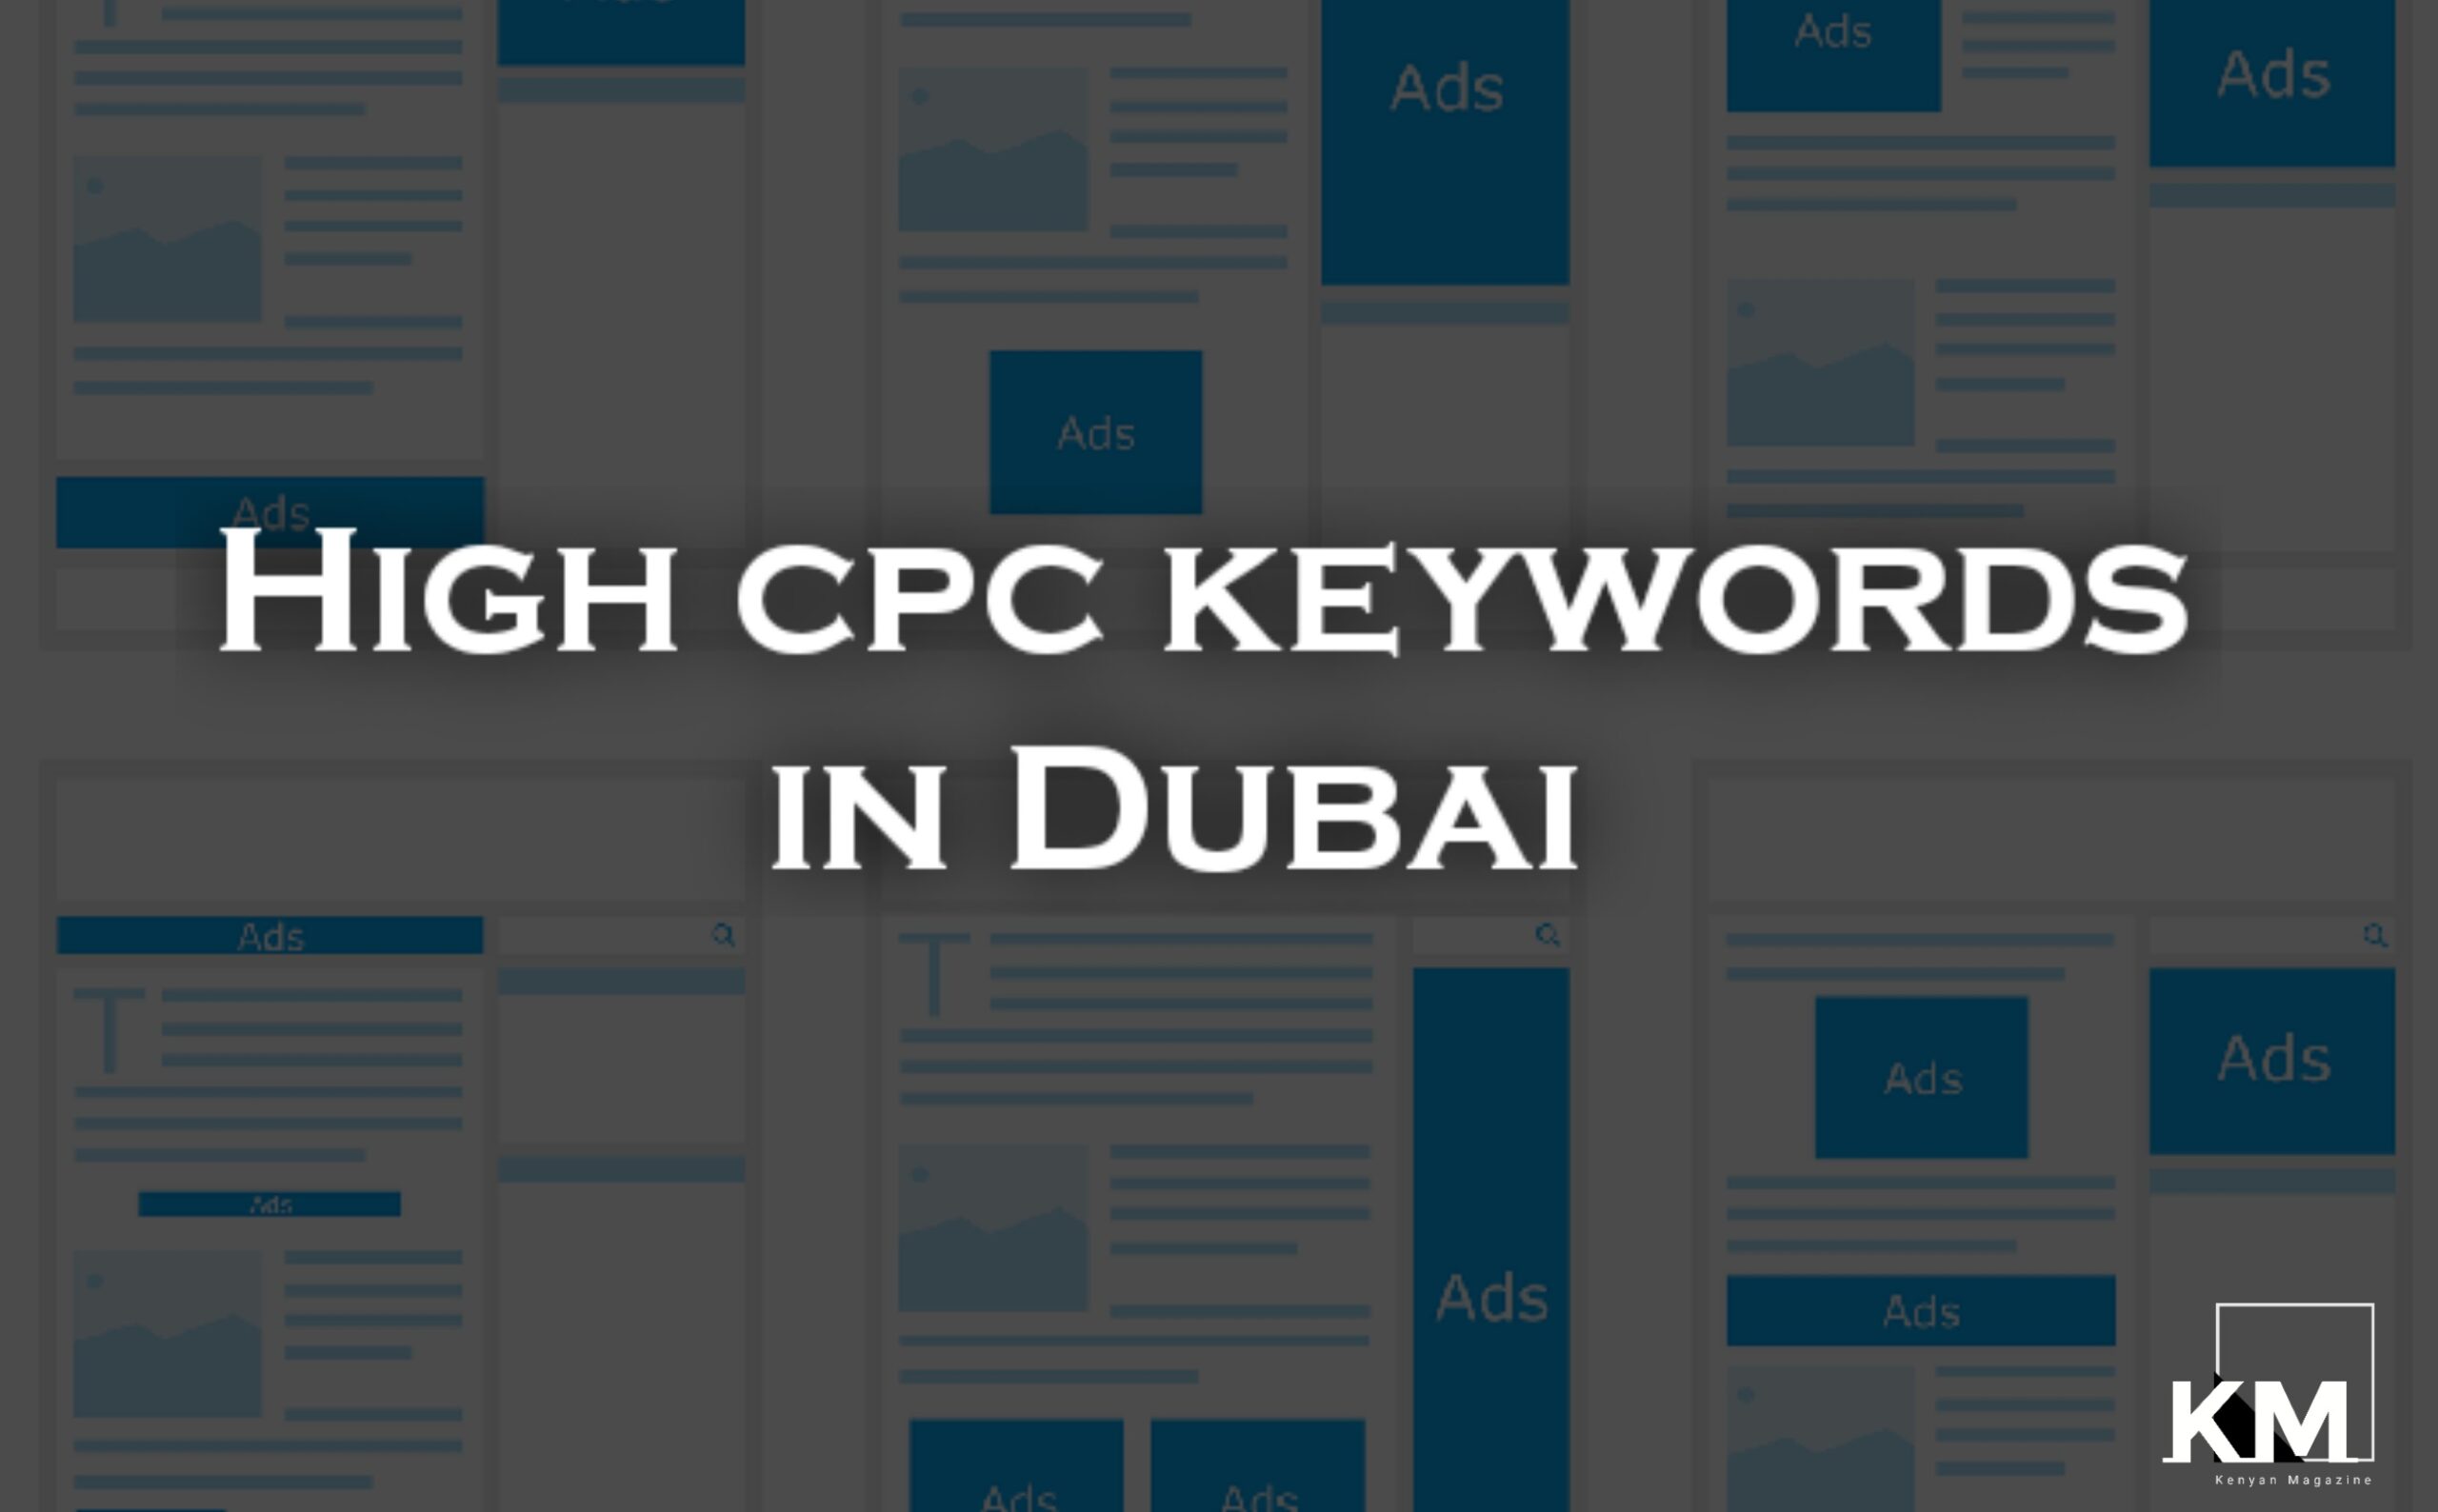 High cpc keywords in Dubai